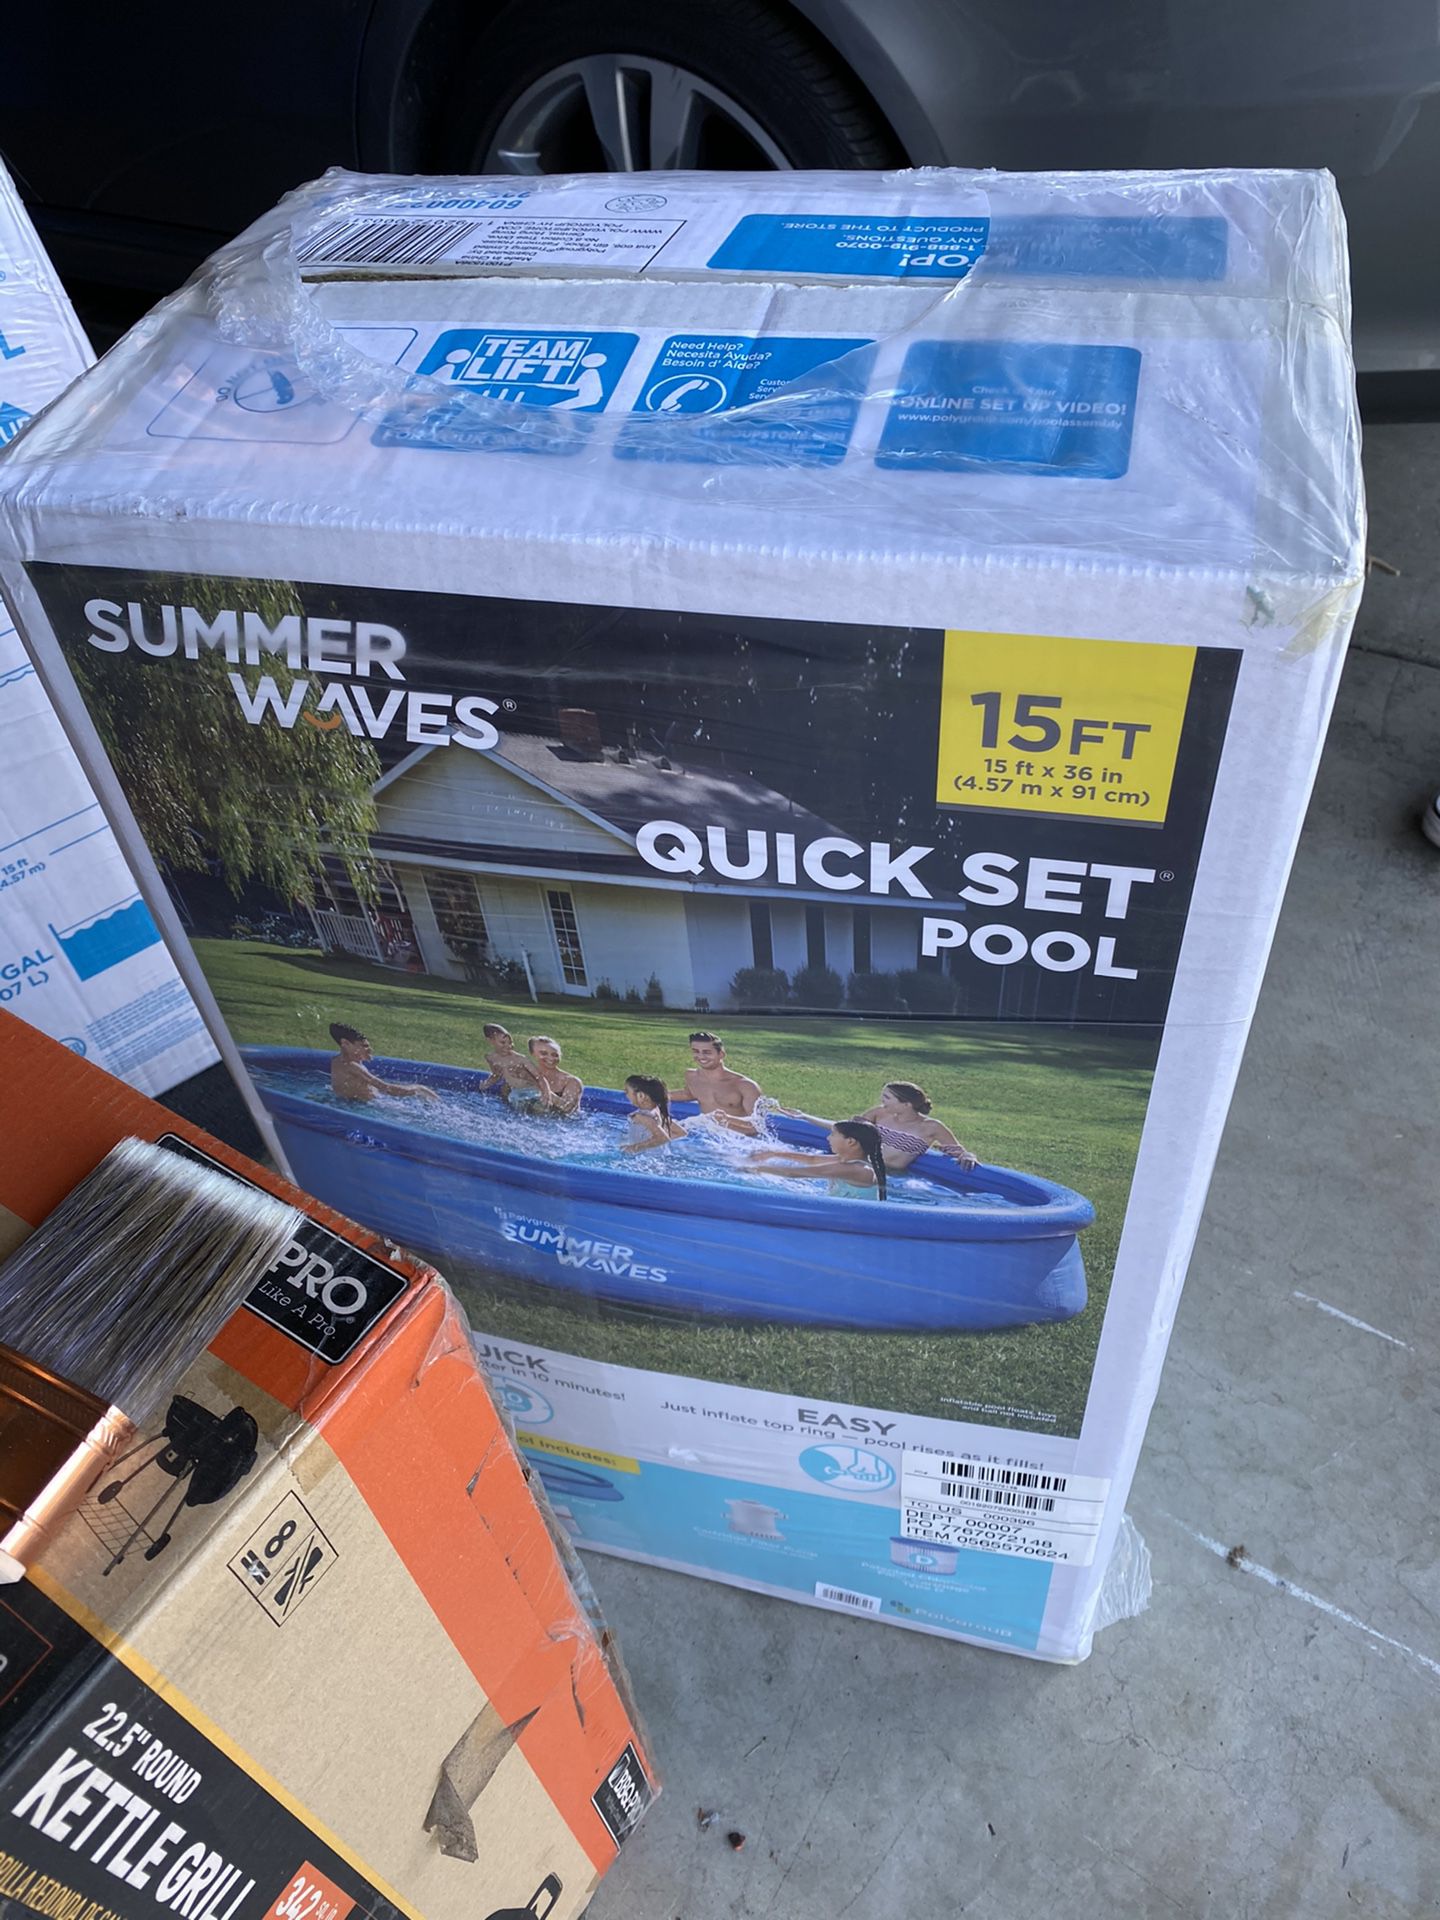 Summer Waves 15Ft pool